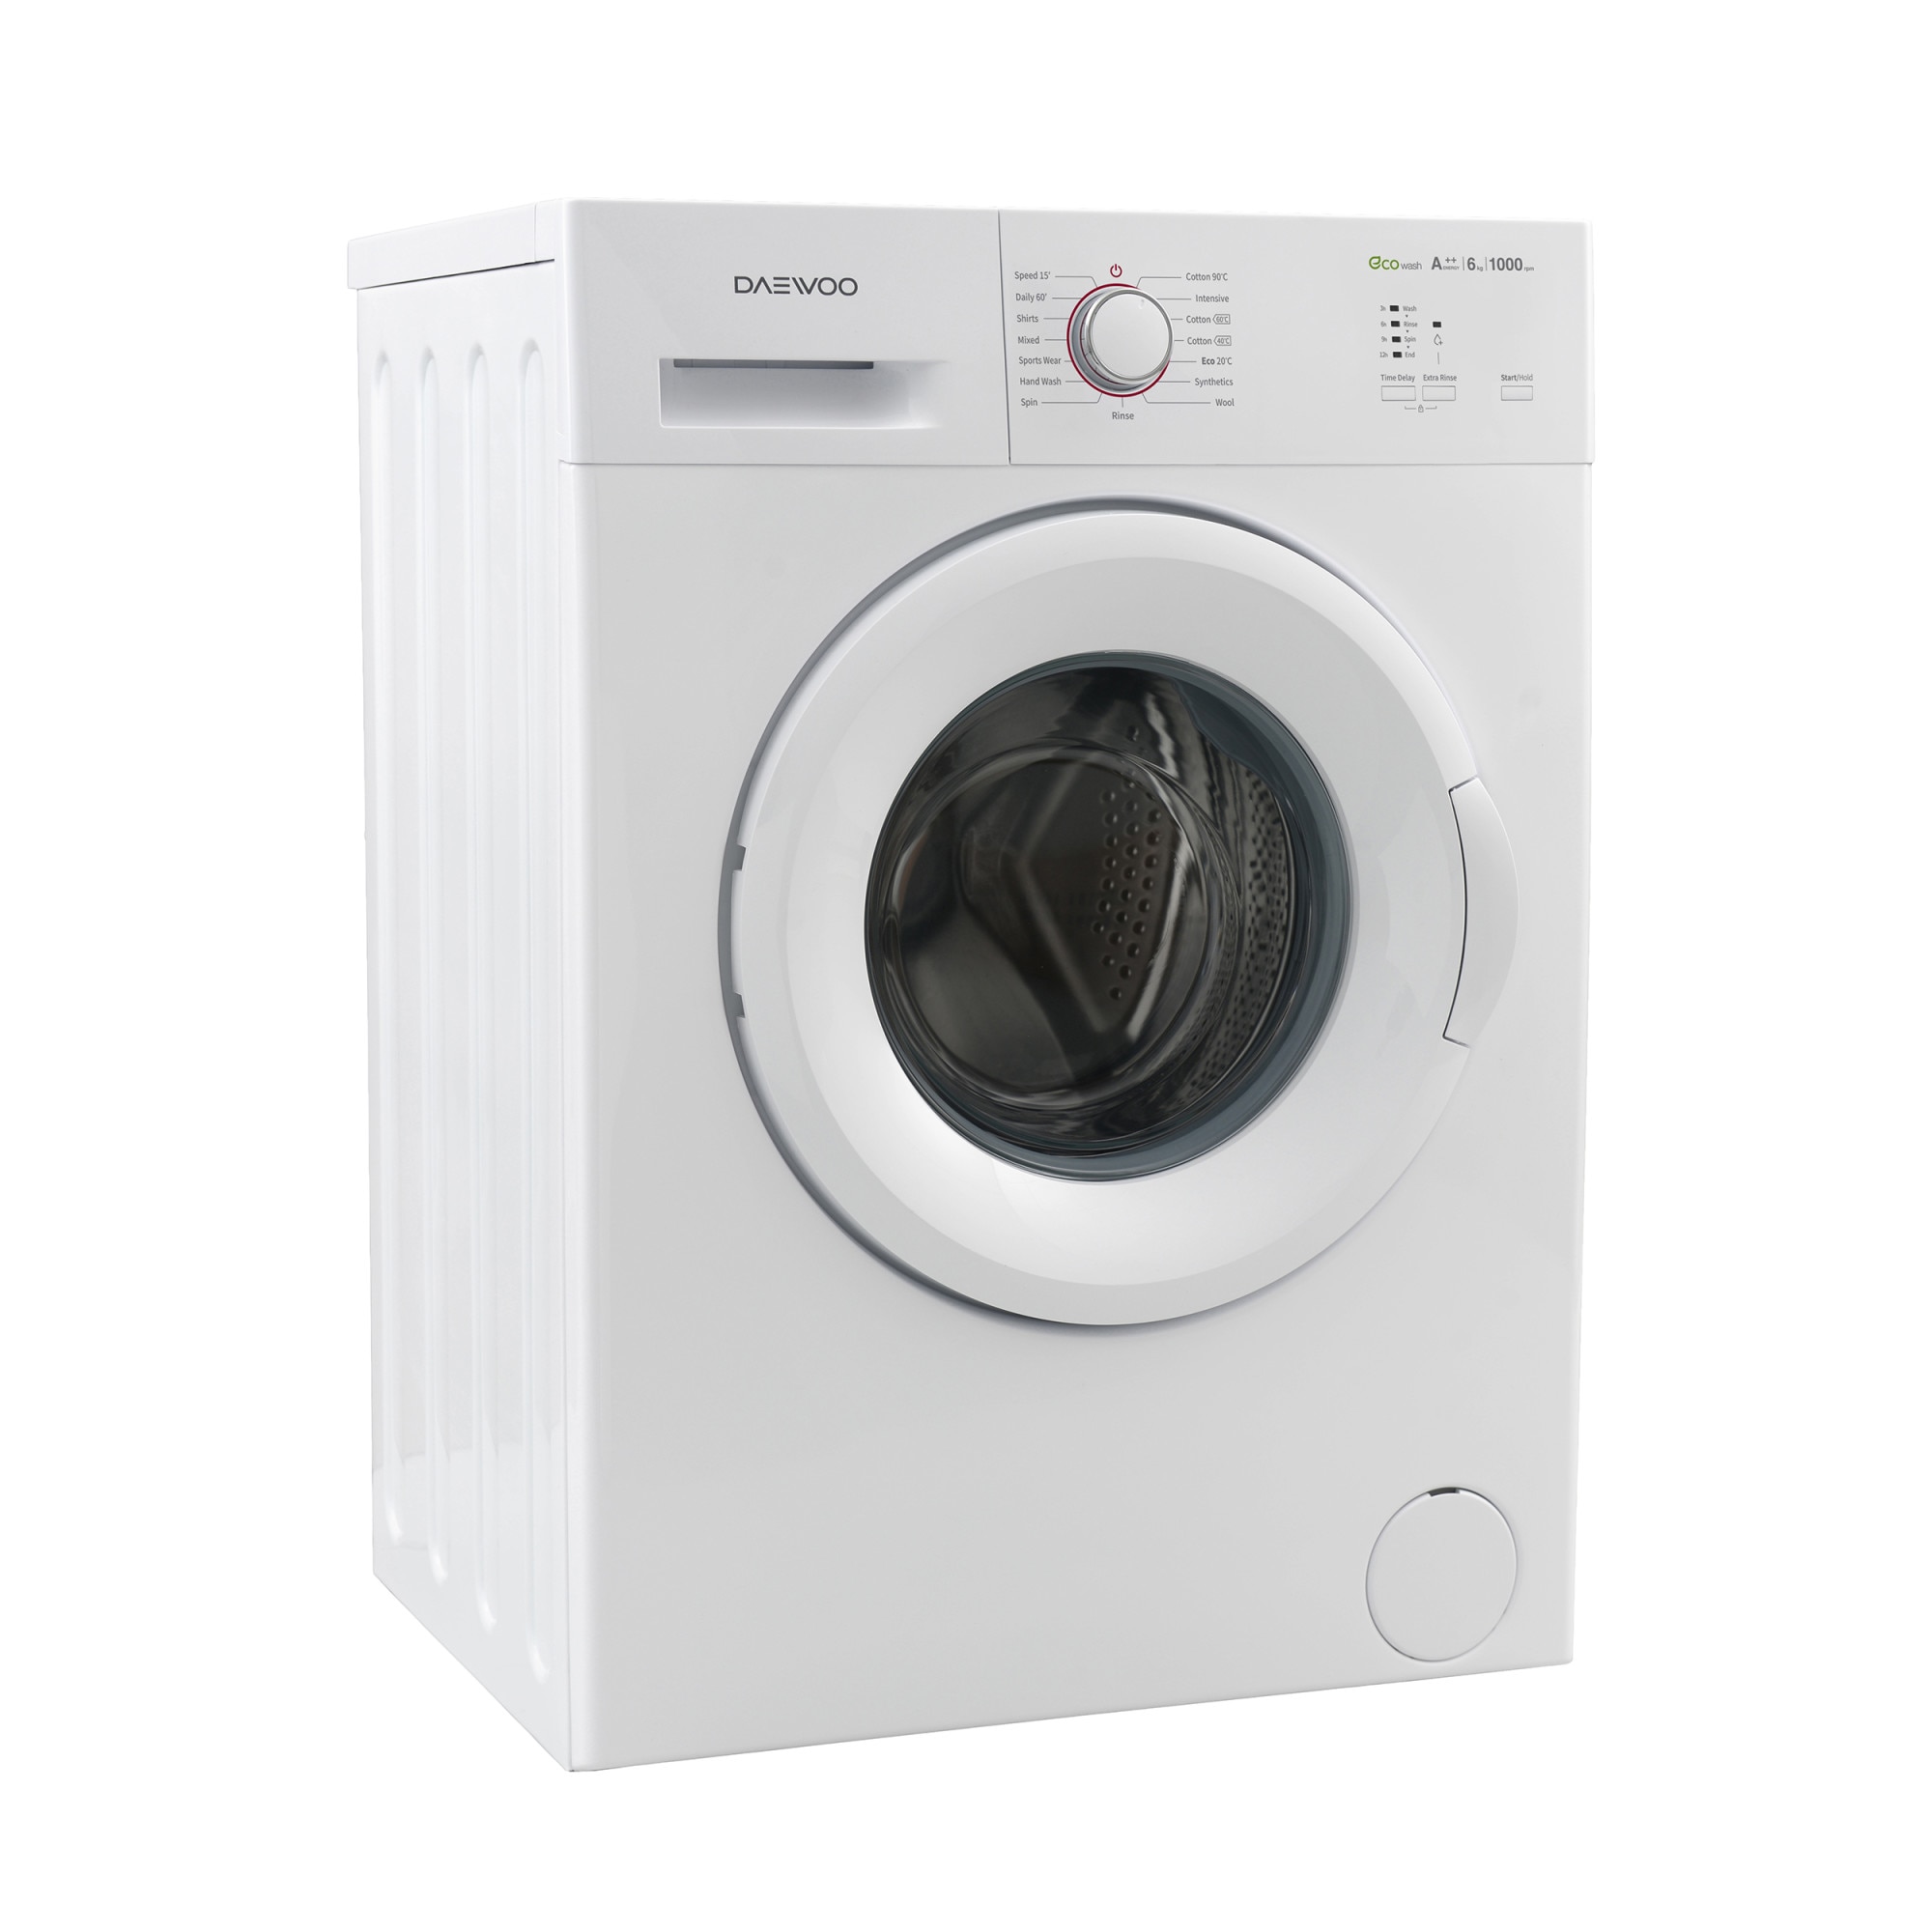 Daewoo dwdmv10b1 lavadora 6kg 1000 rpm barato de outlet